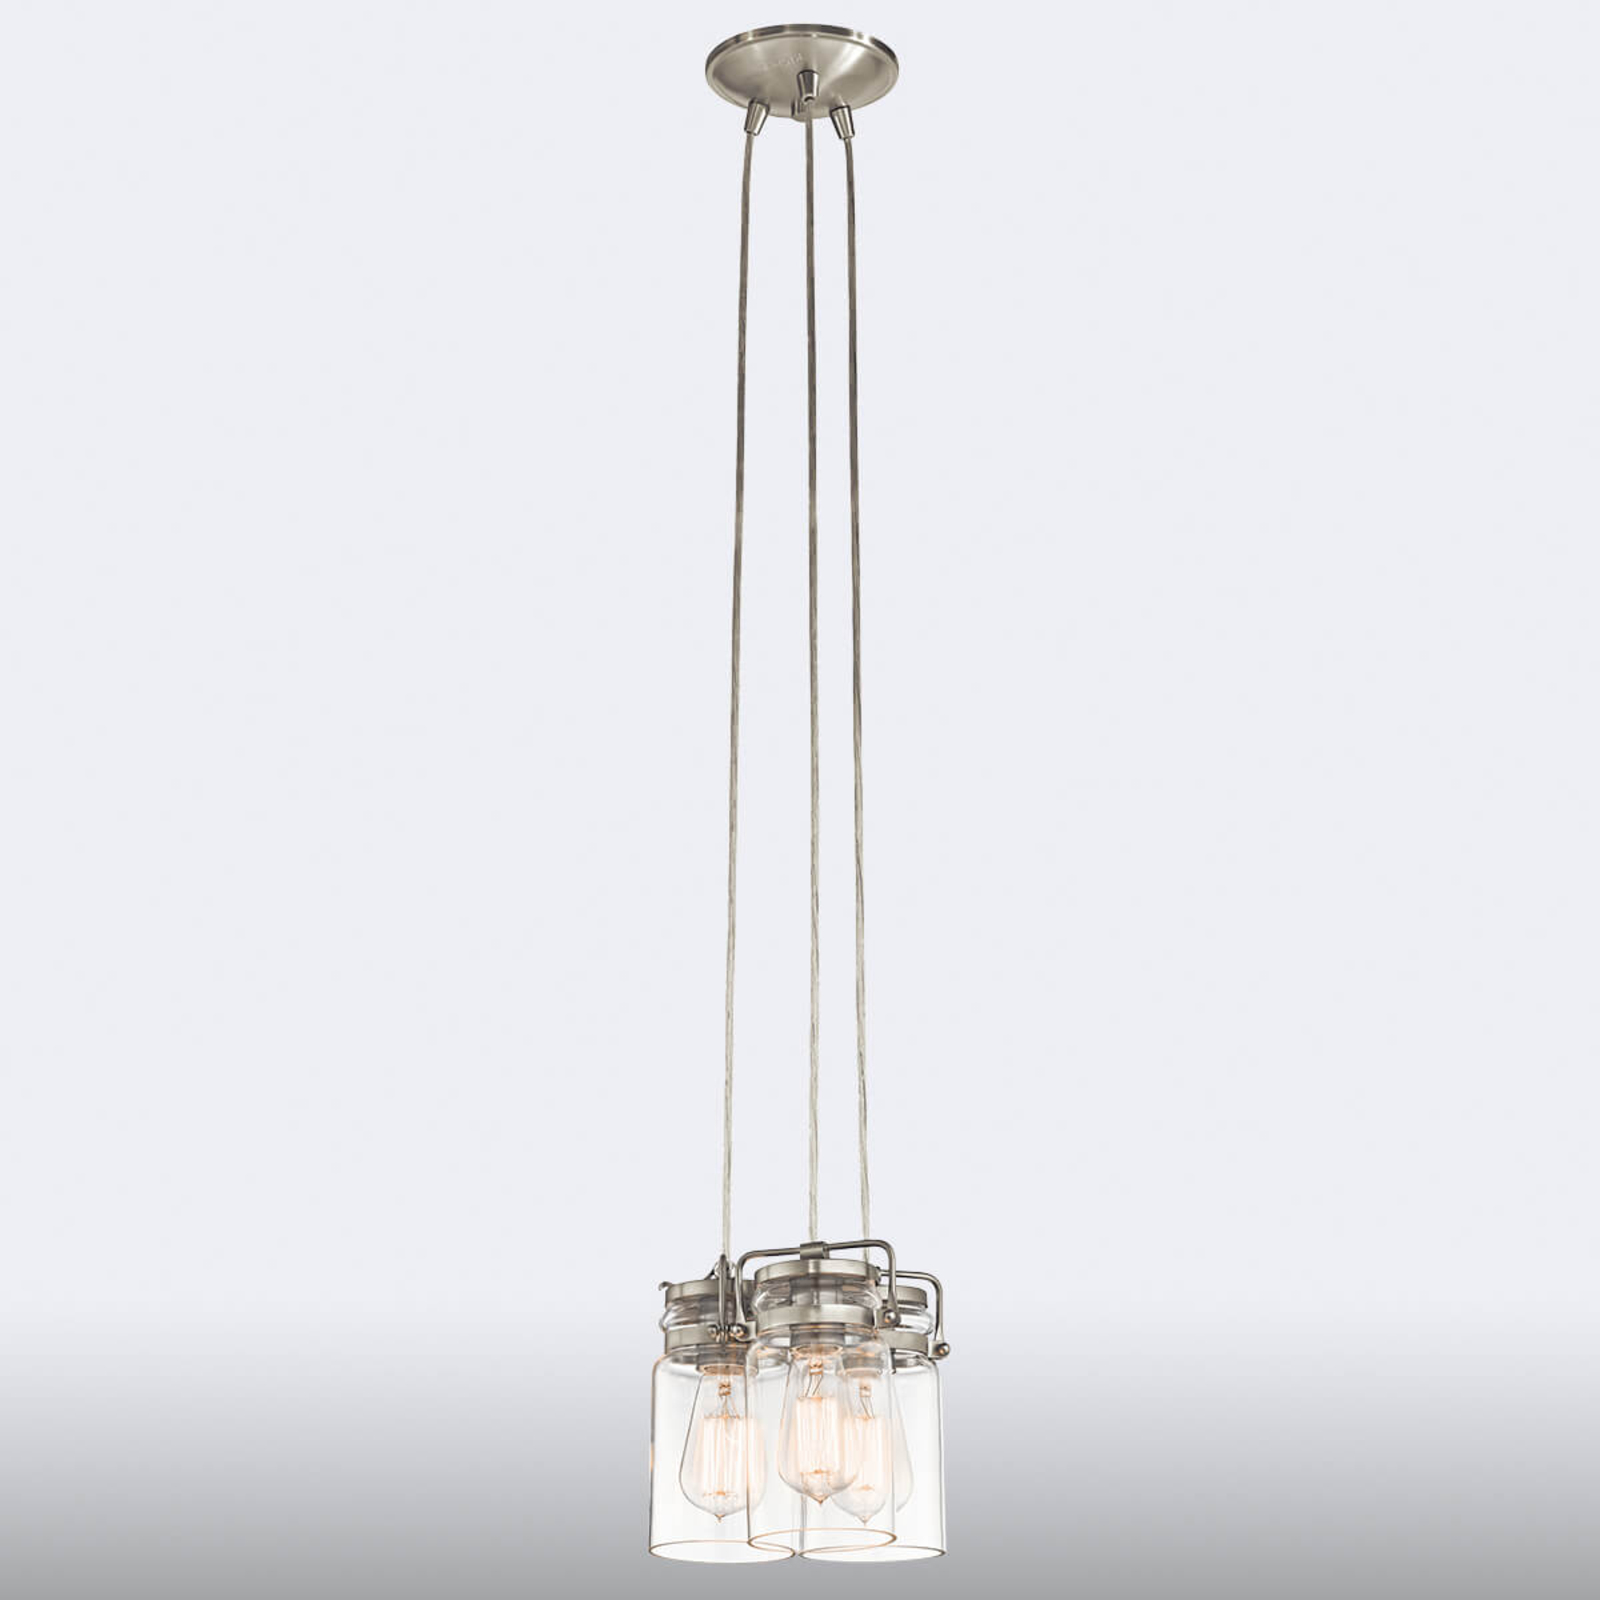 Brinley - 3-lamps hanglamp in retrolook